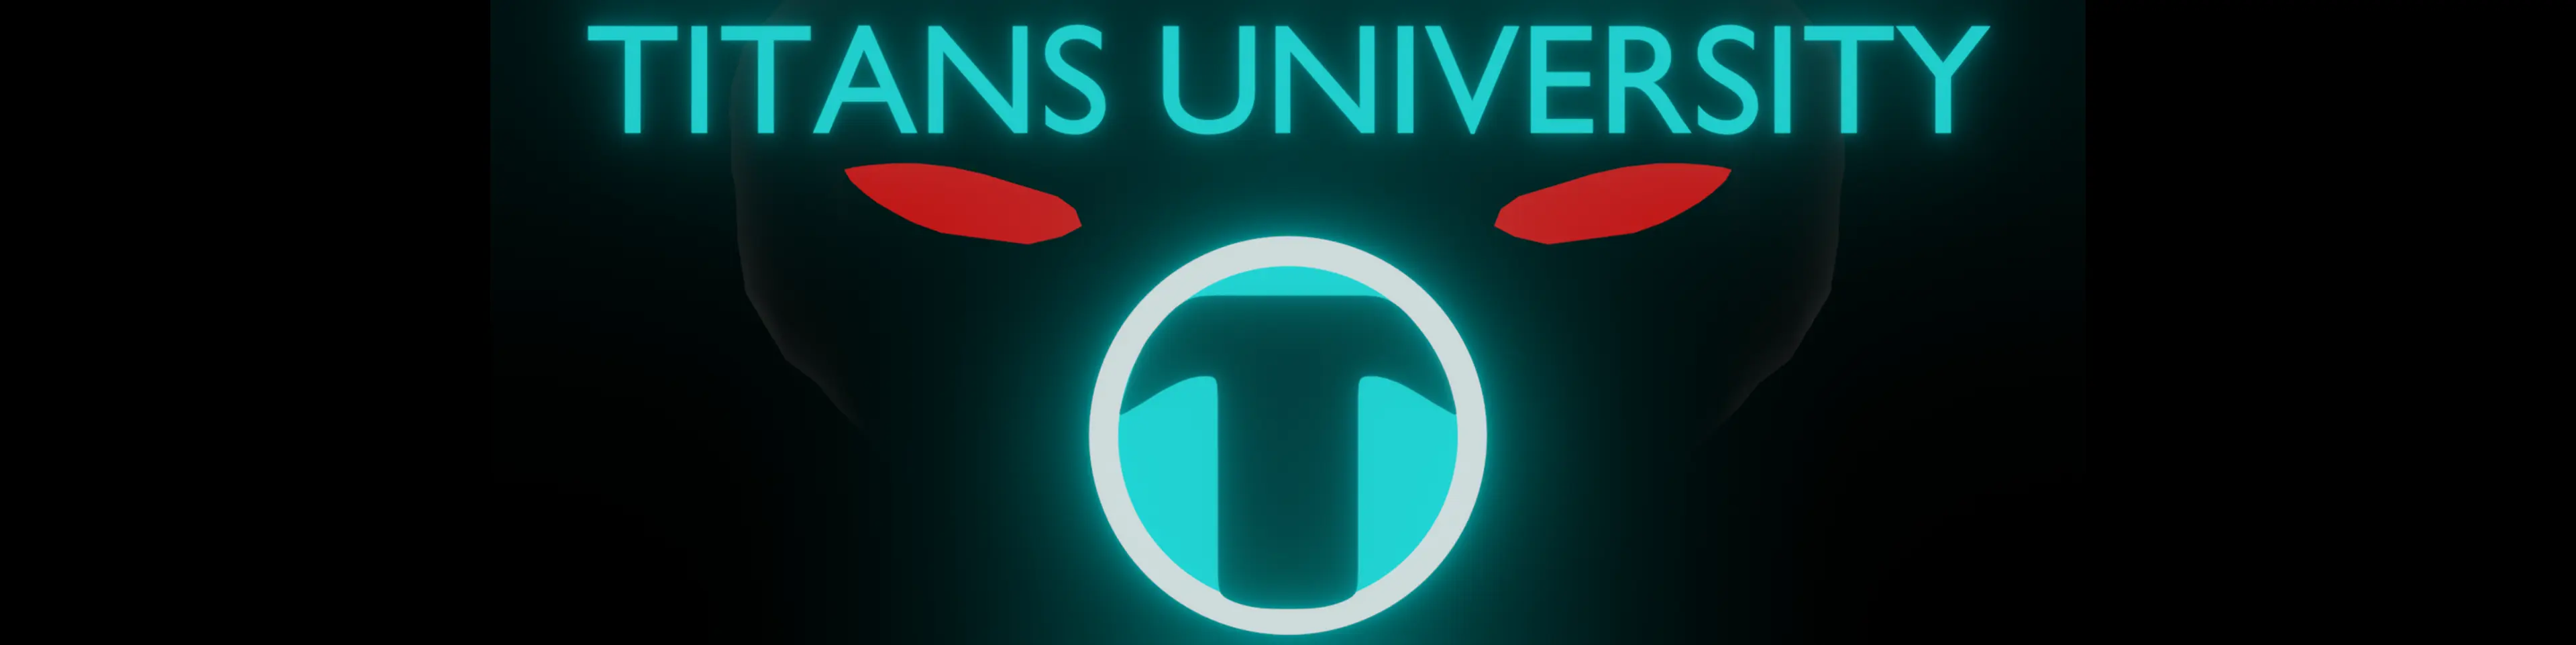 Titans University [v0.0.9] main image